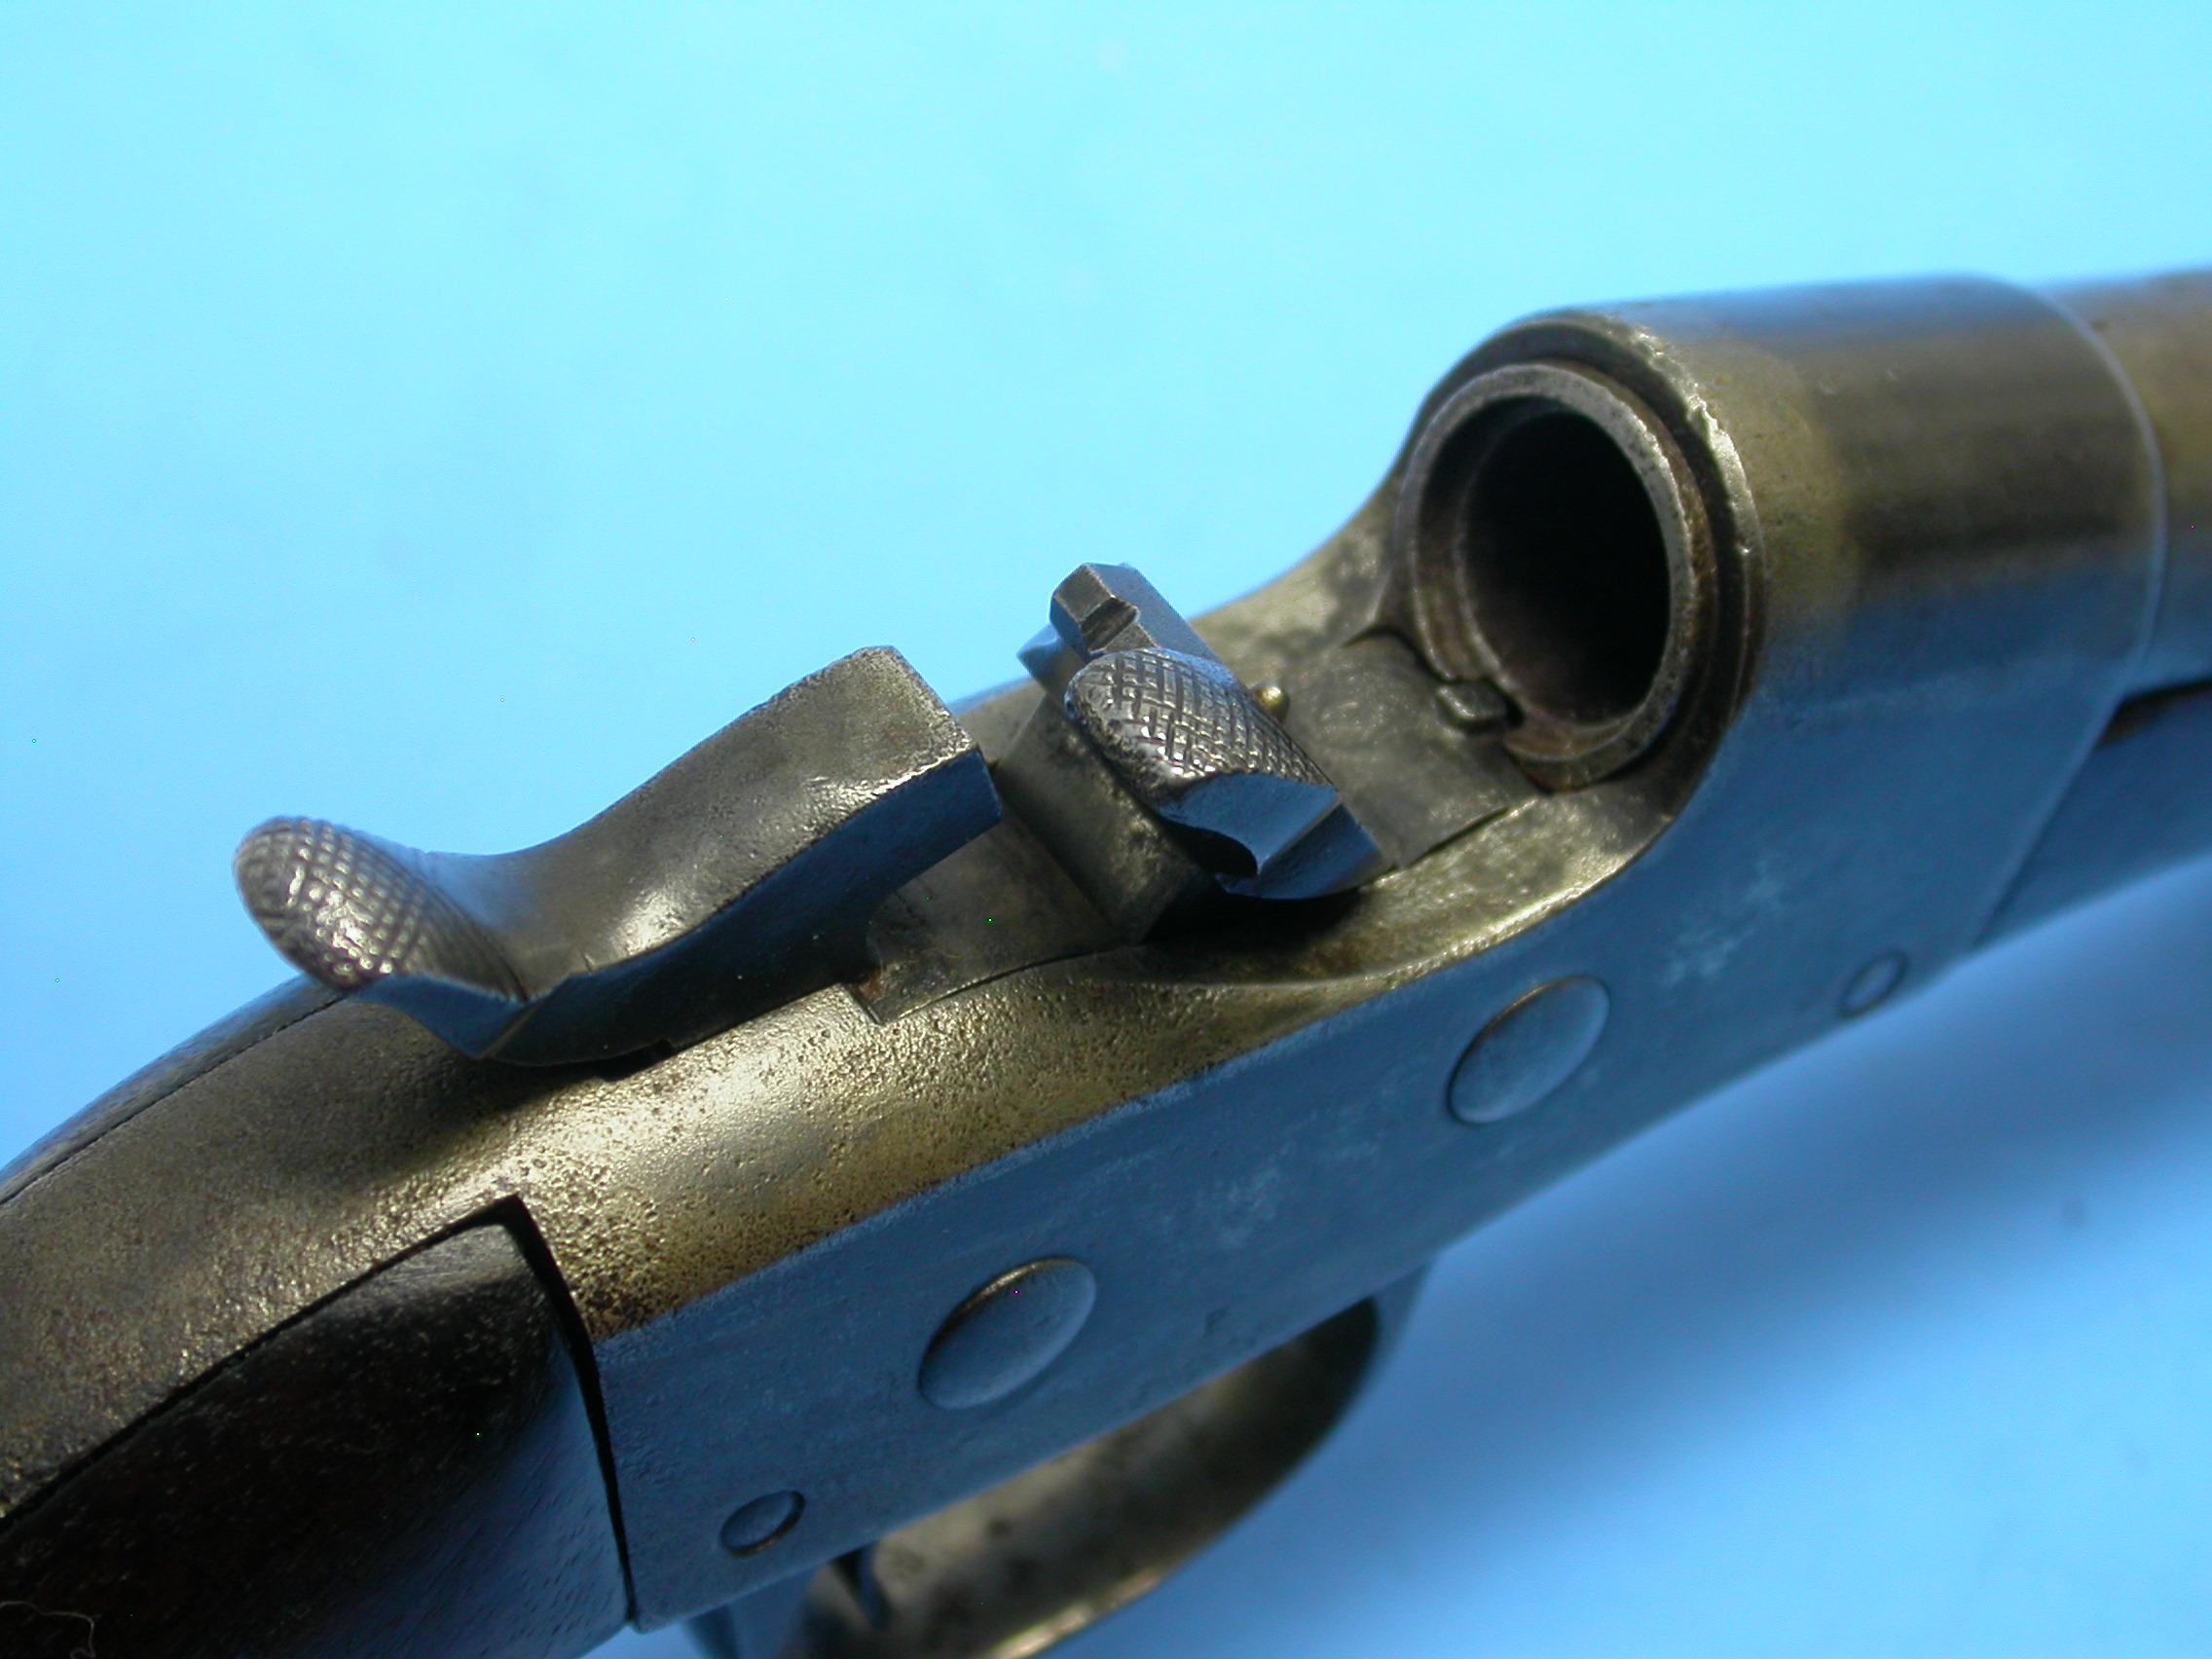 US Navy Remington Model 1867 .50 Caliber Rolling Block Pistol - Antique - no FFL needed (XJE1)